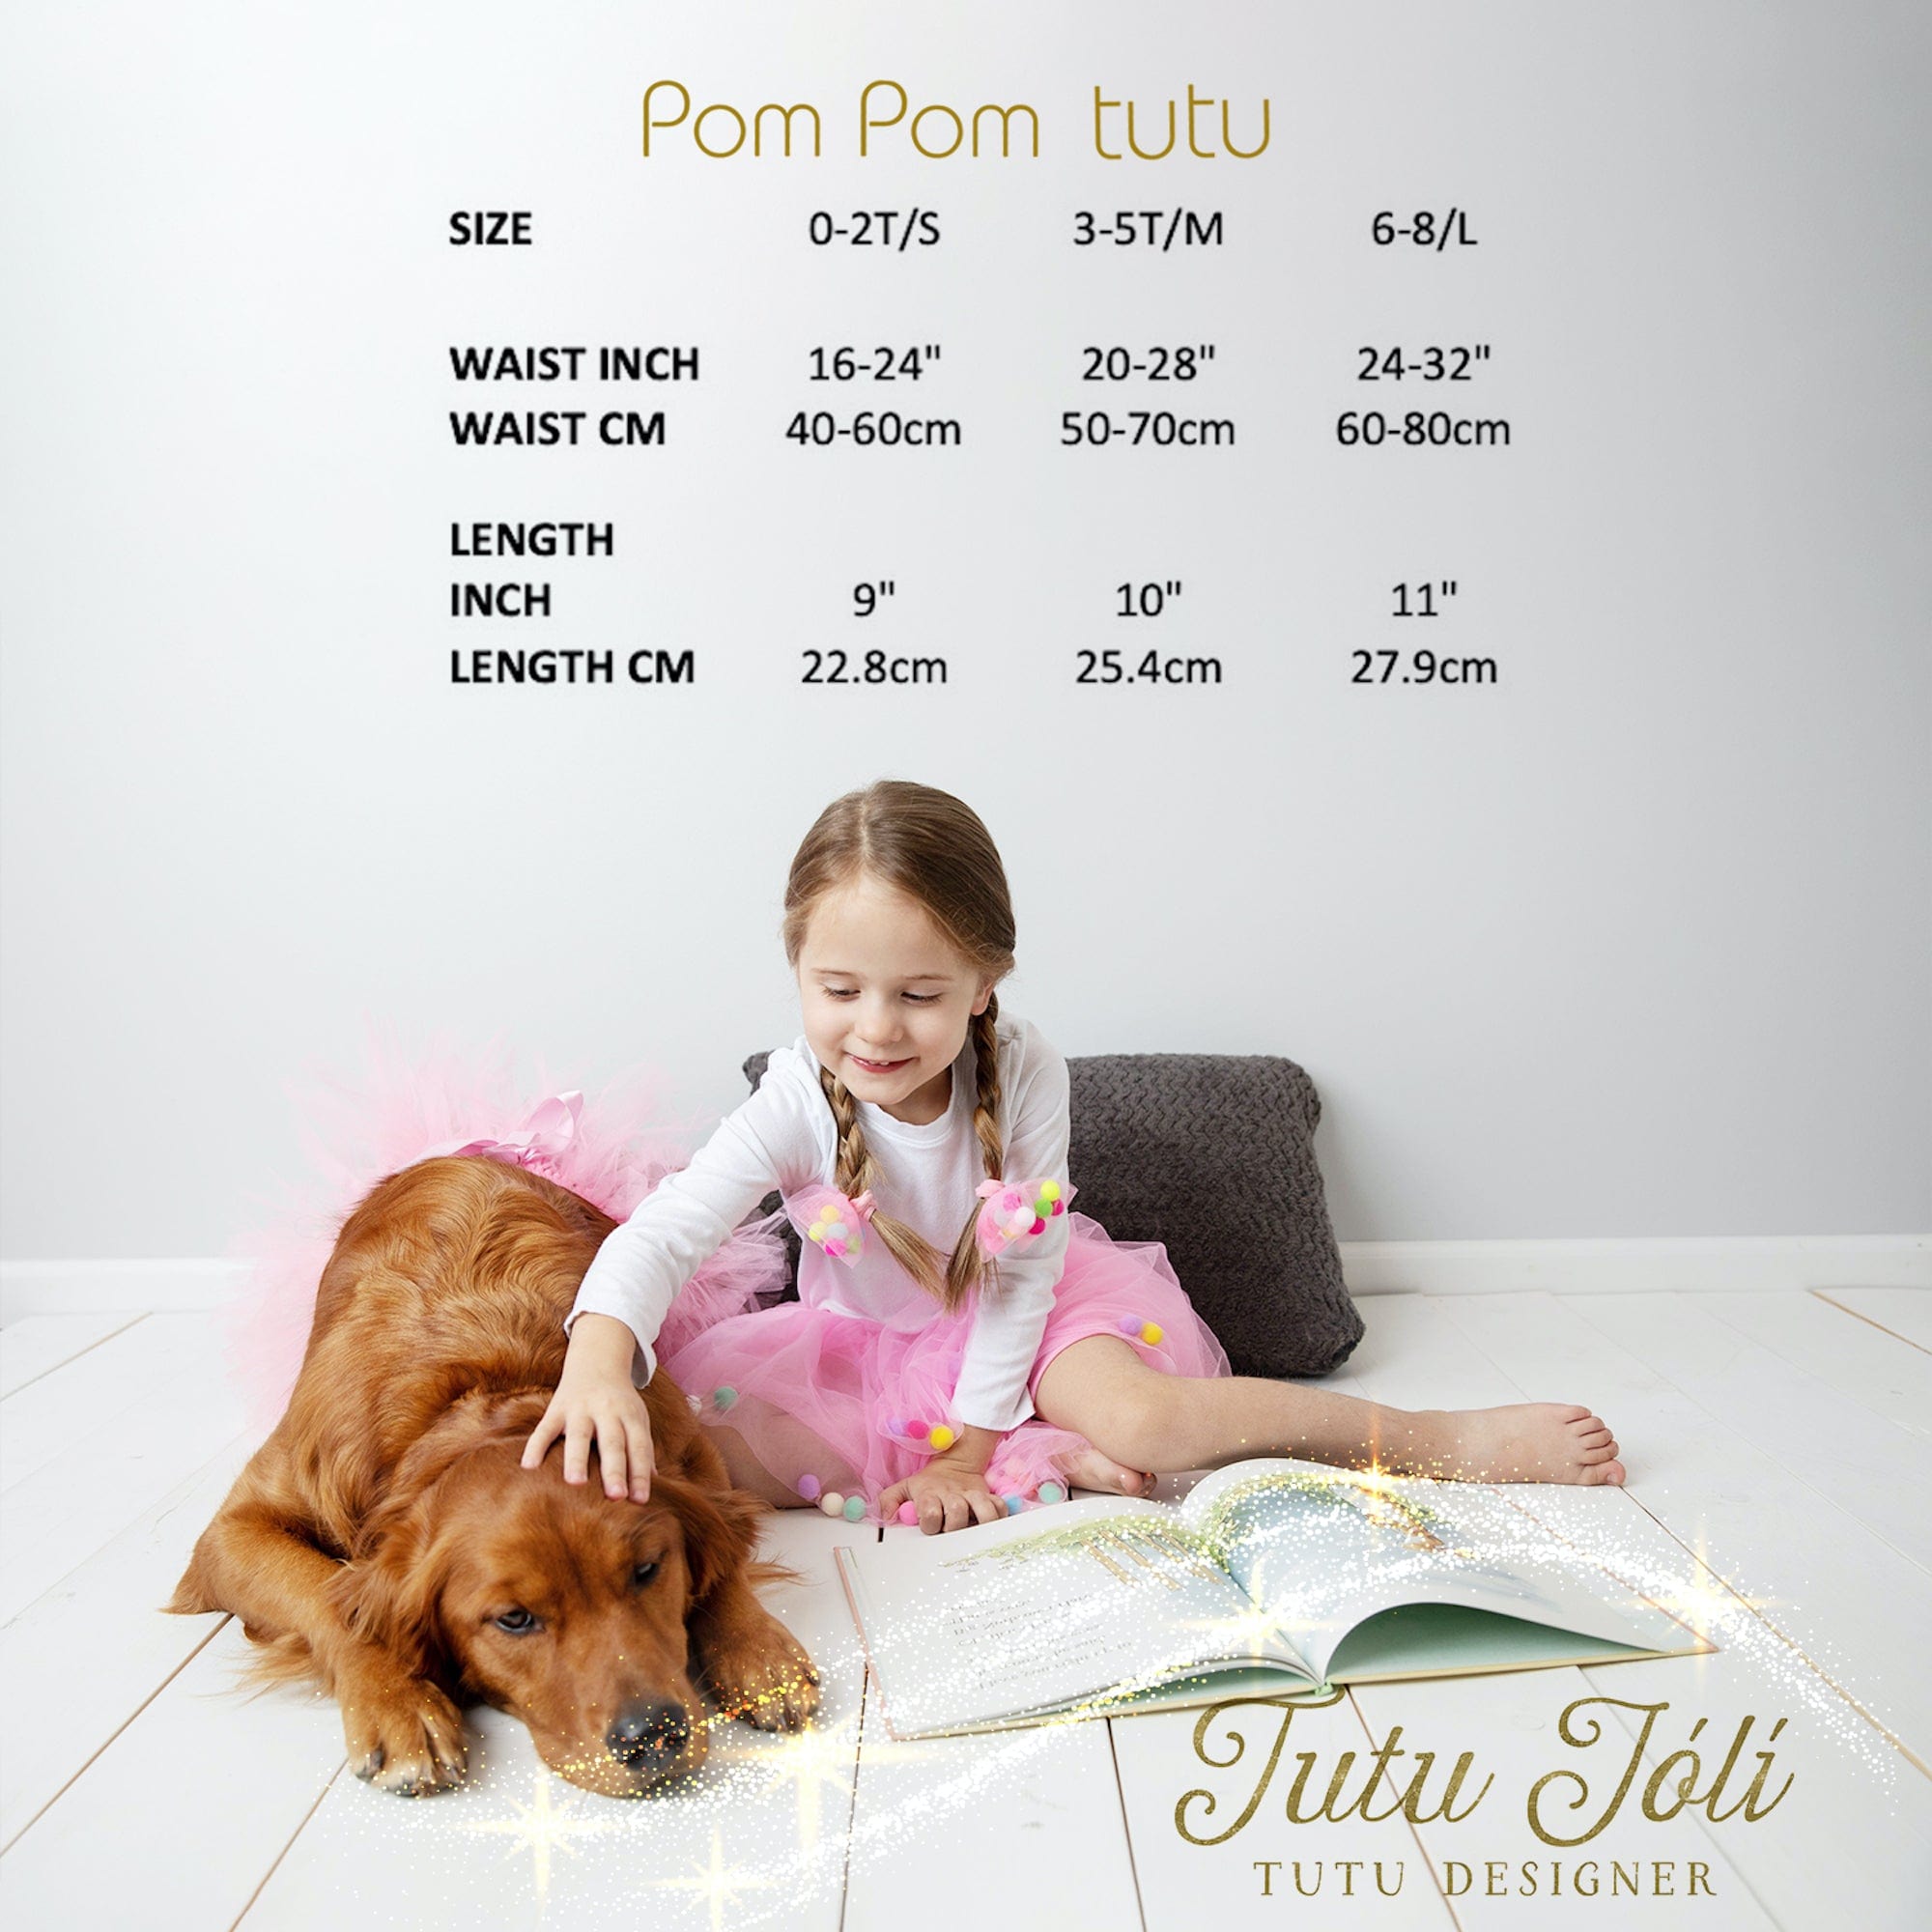 Pink Tutu For Girls | Pom Pom Tutu Skirt With Necklace and Bracelet | 3Pcs Set